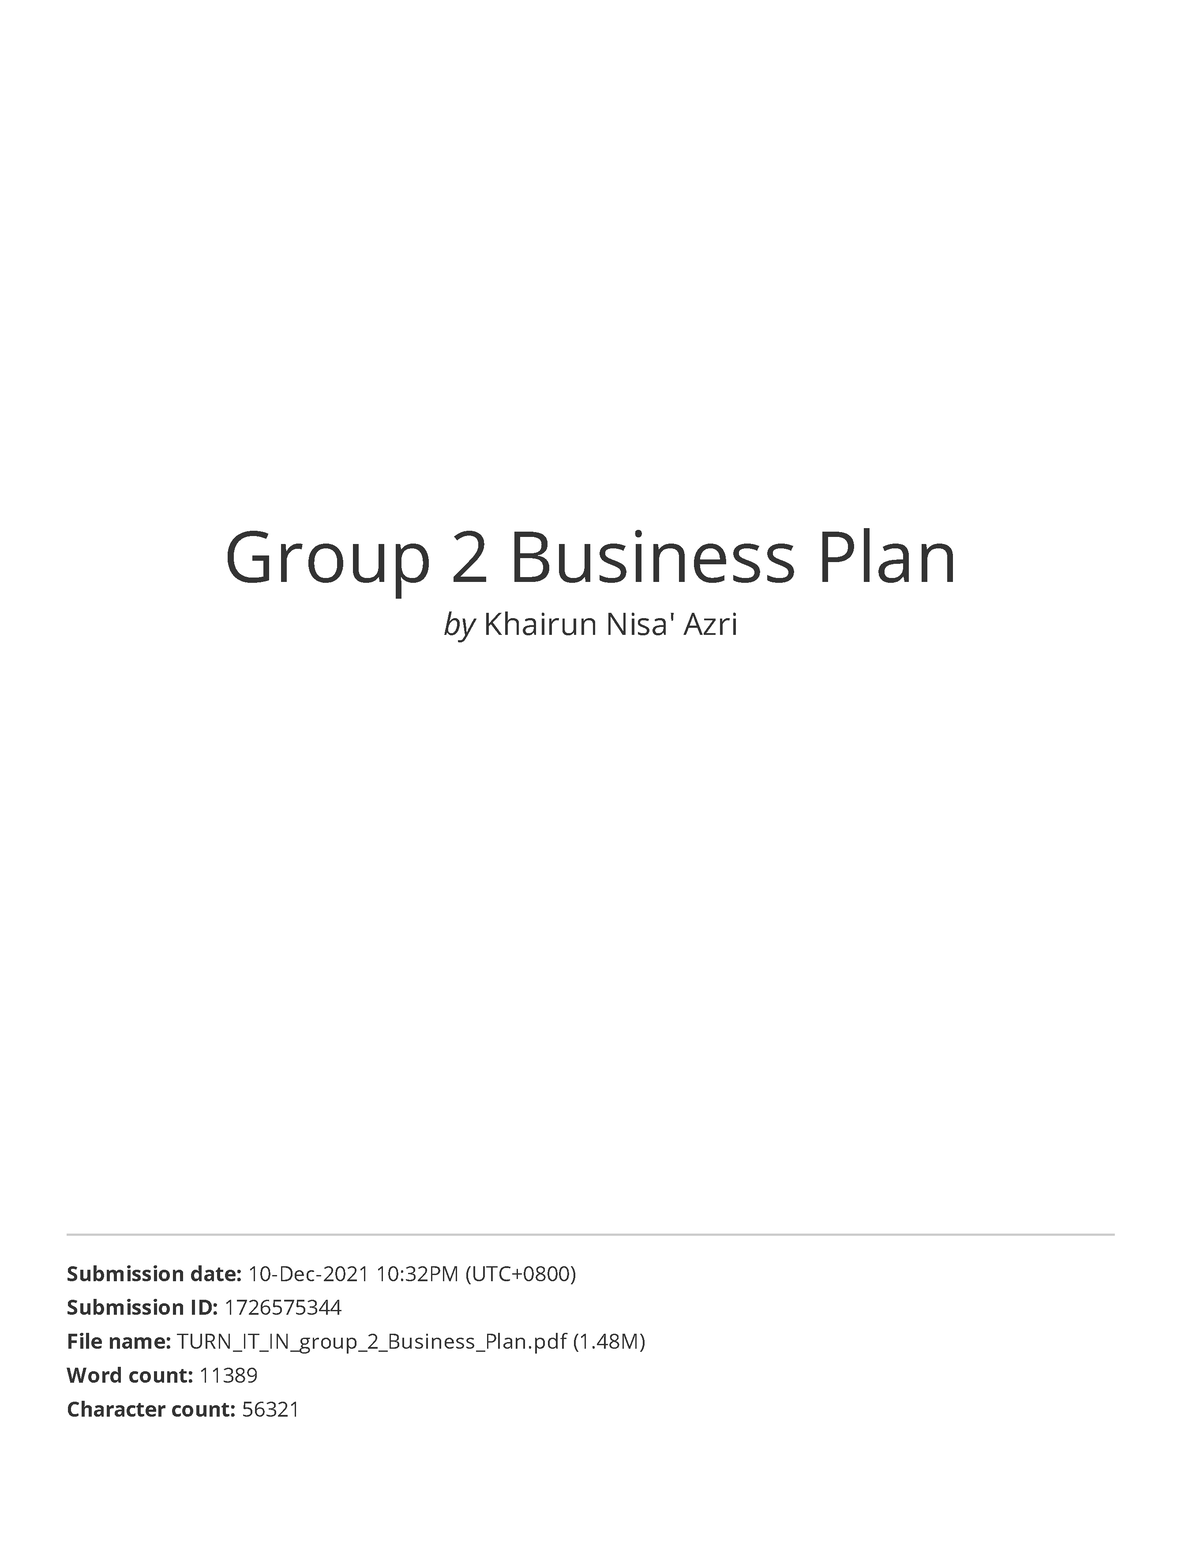 ent300 business plan assignment